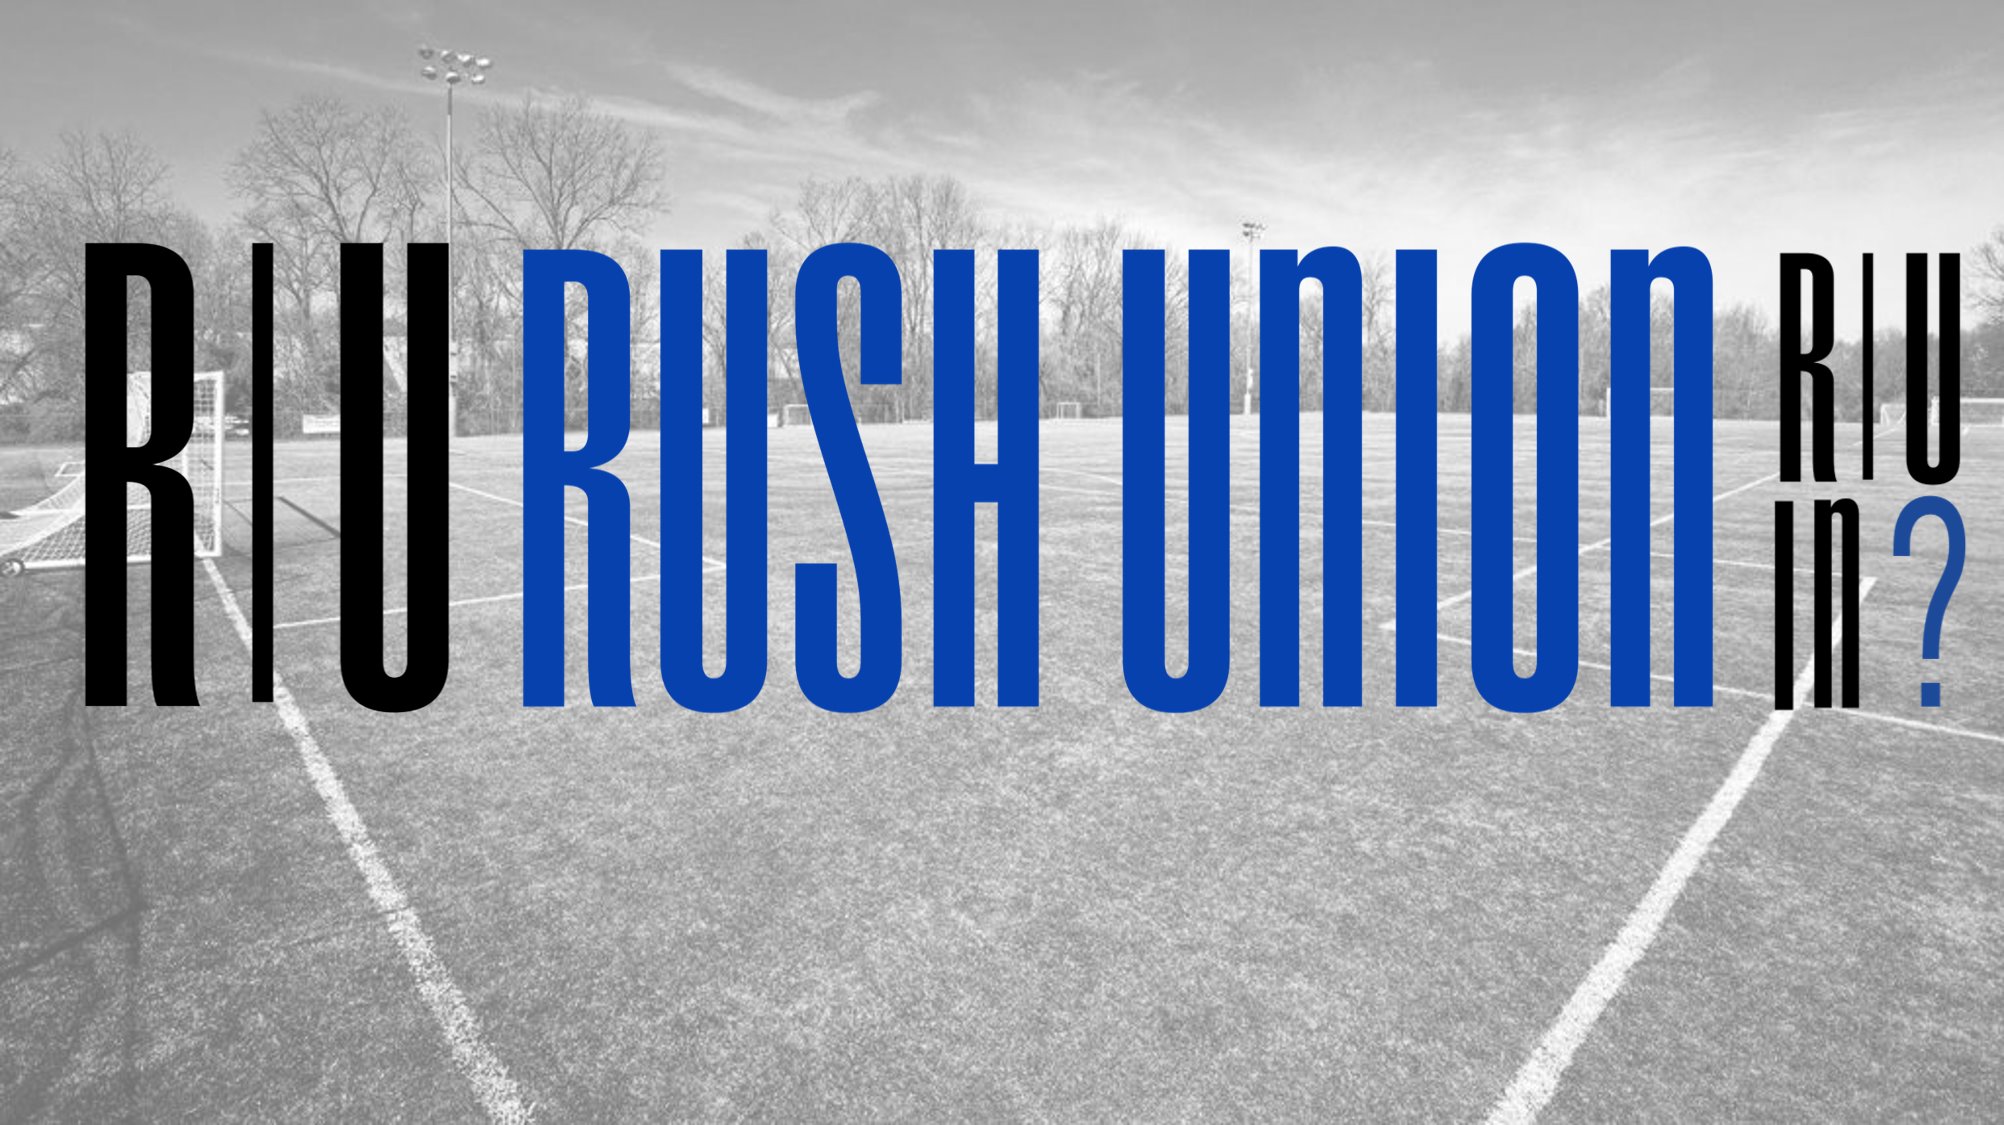 Rush Union Soccer